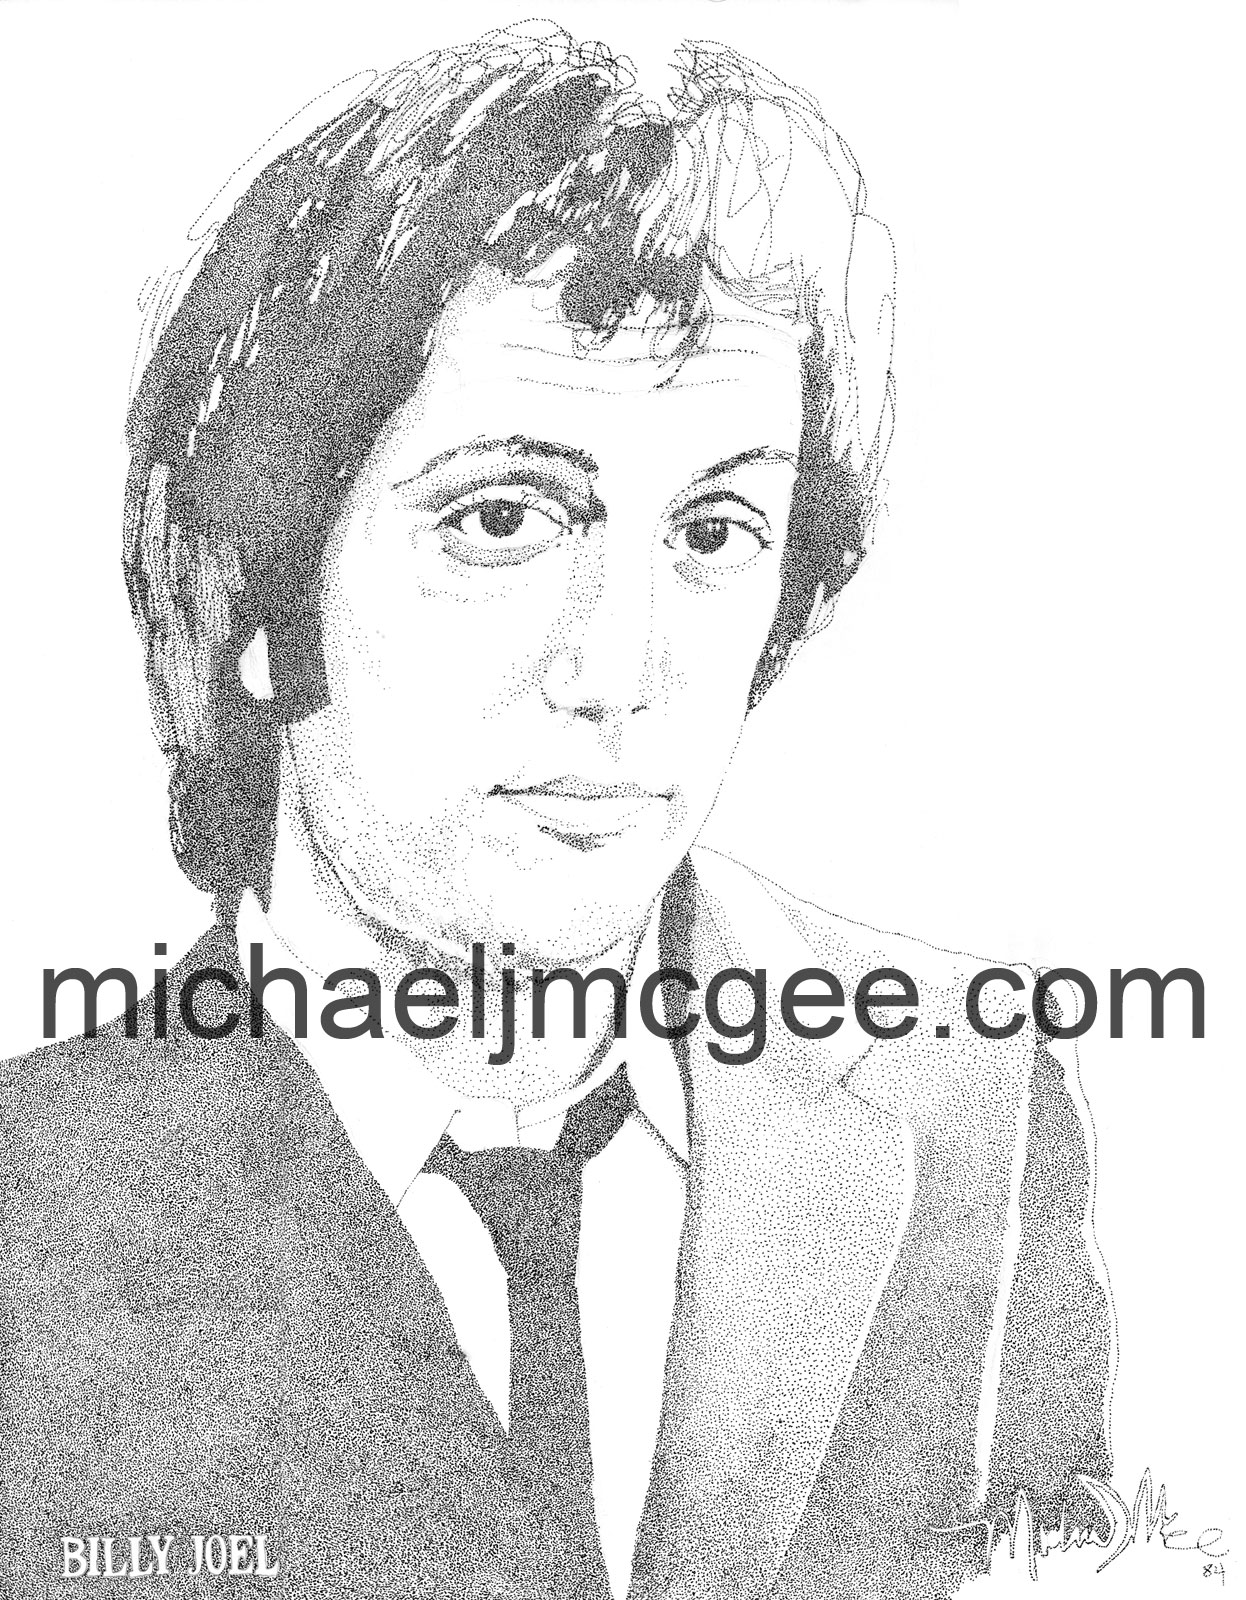 Billy Joel / MJM Artworks / michaeljmcgee.com